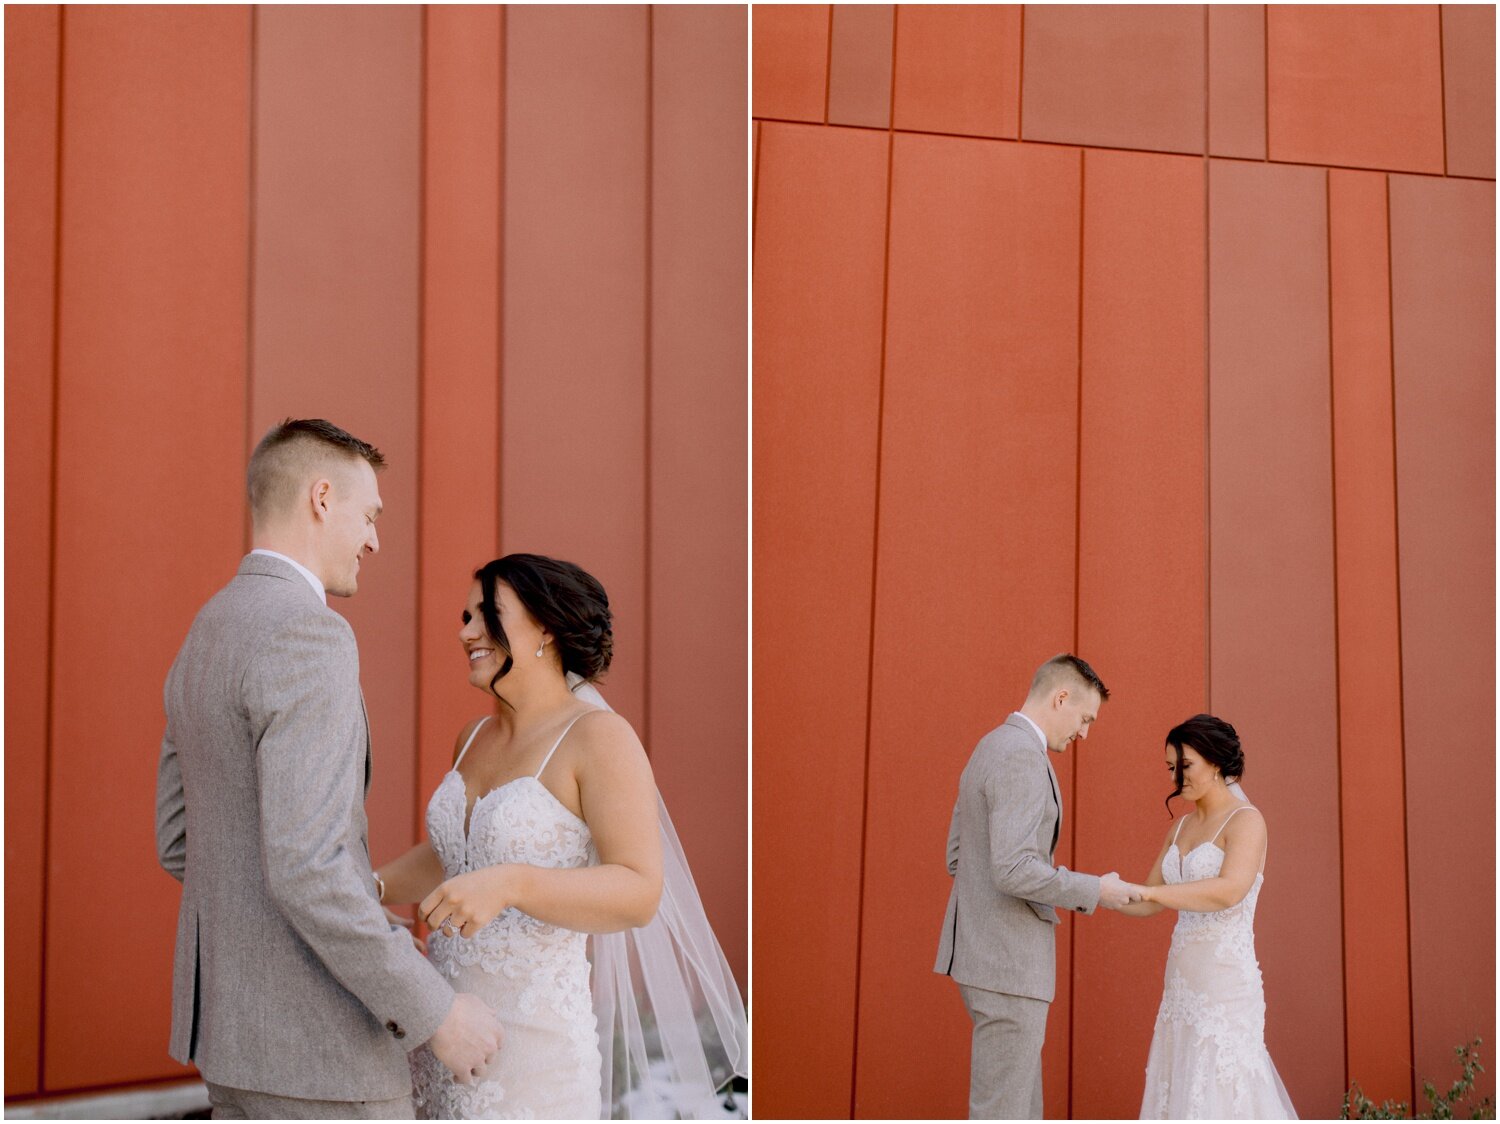 Andrew Ferren Photography - Des Moines Iowa Wedding Photographer - Destination - Engagement - Videography - Videographer - The River Center15.jpg